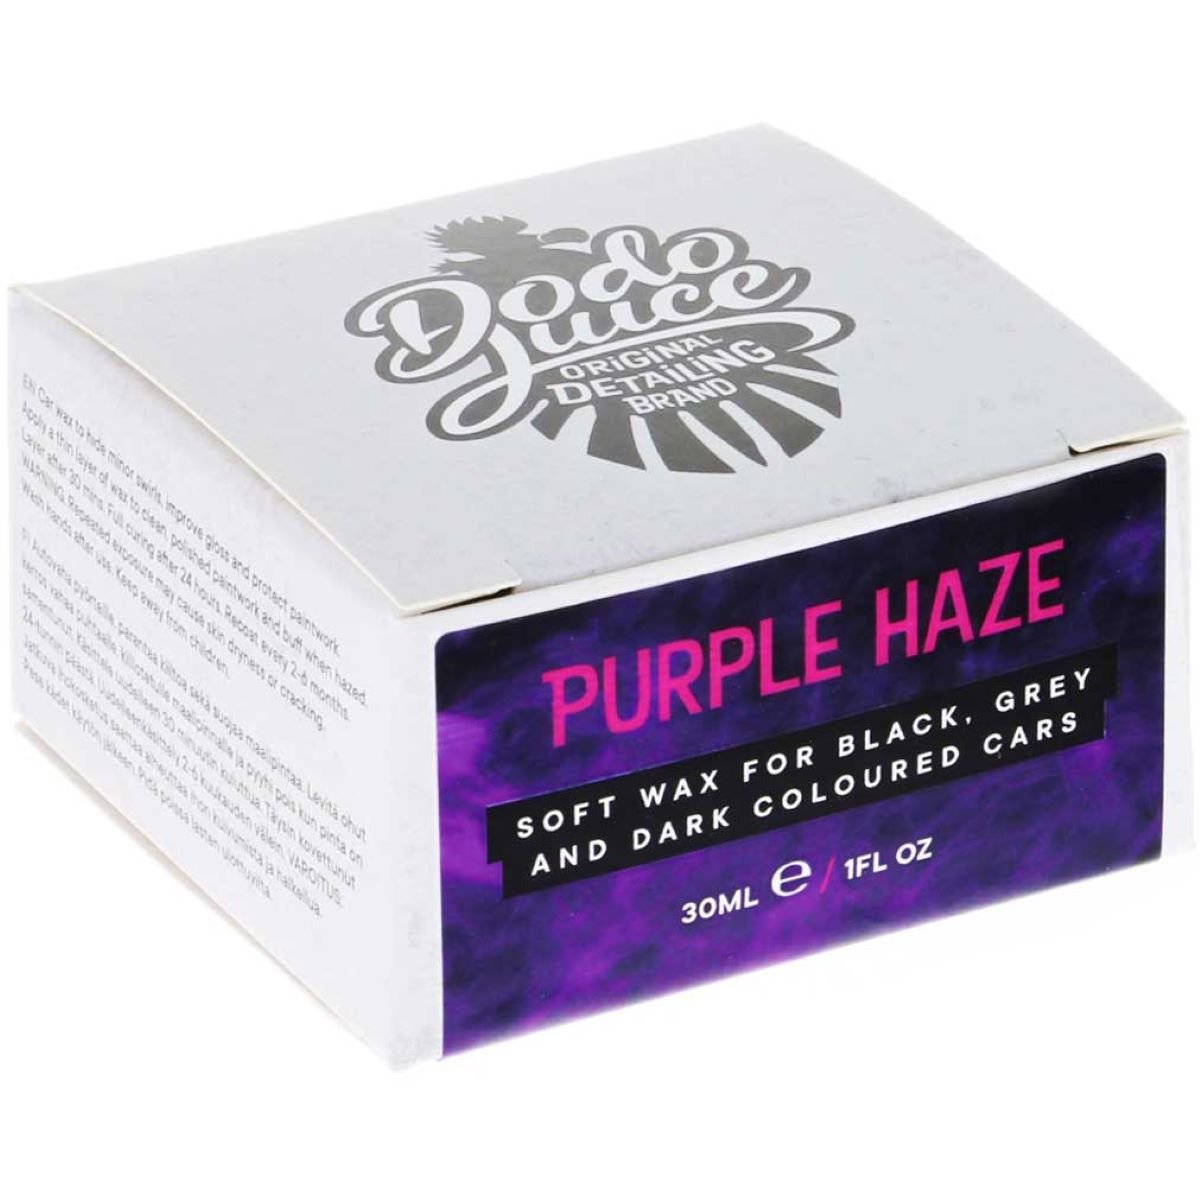 Purple Haze soft wax for dark coloured cars  - 30ml